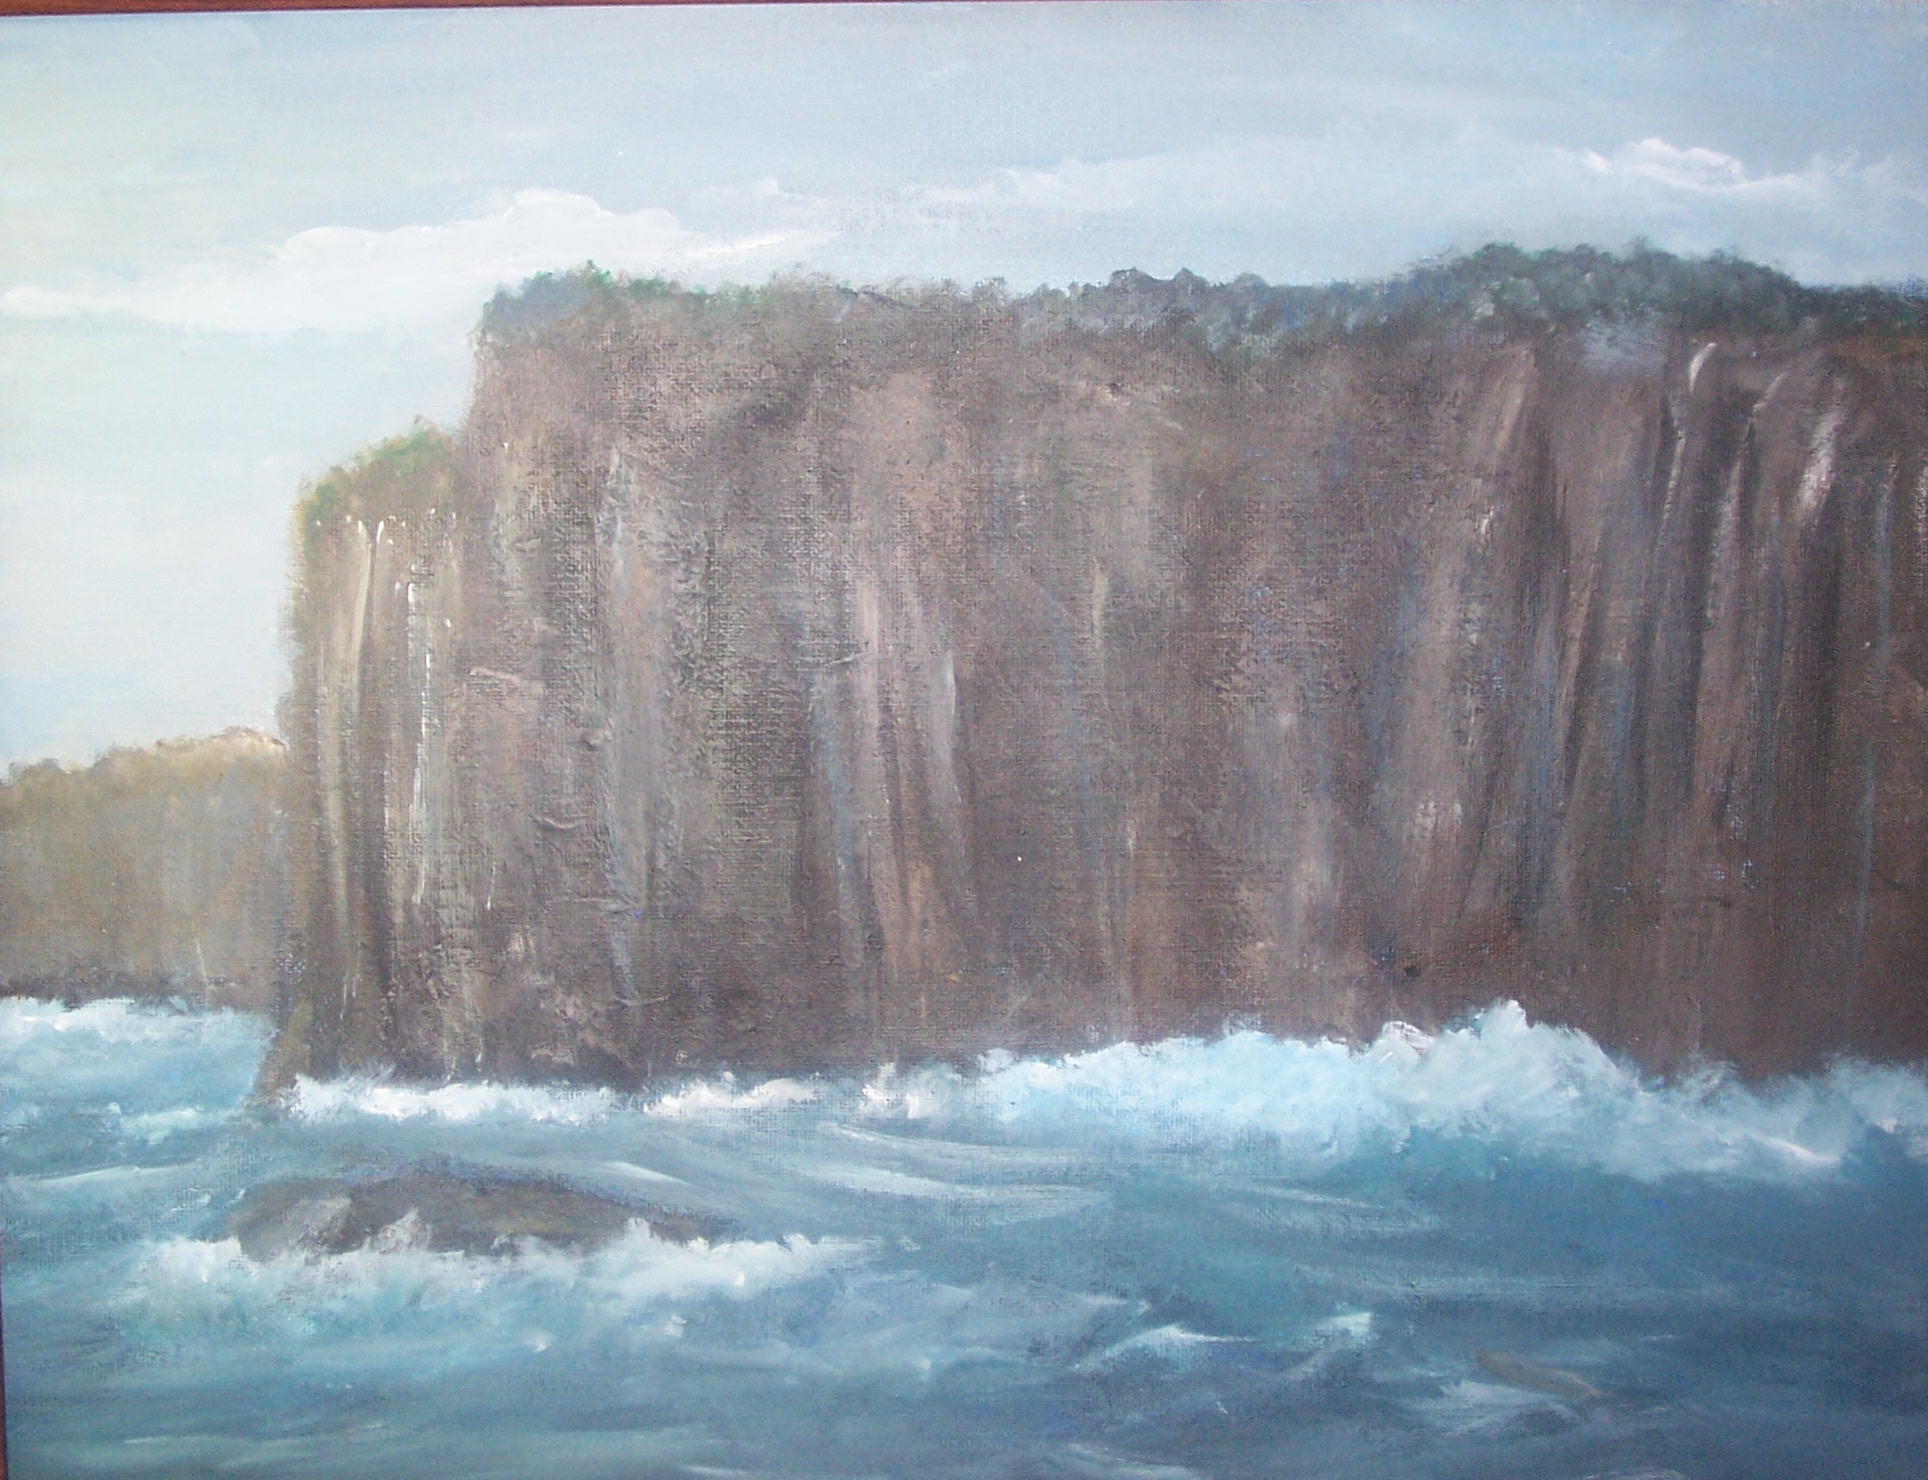 Cliffs of Moher - Ireland